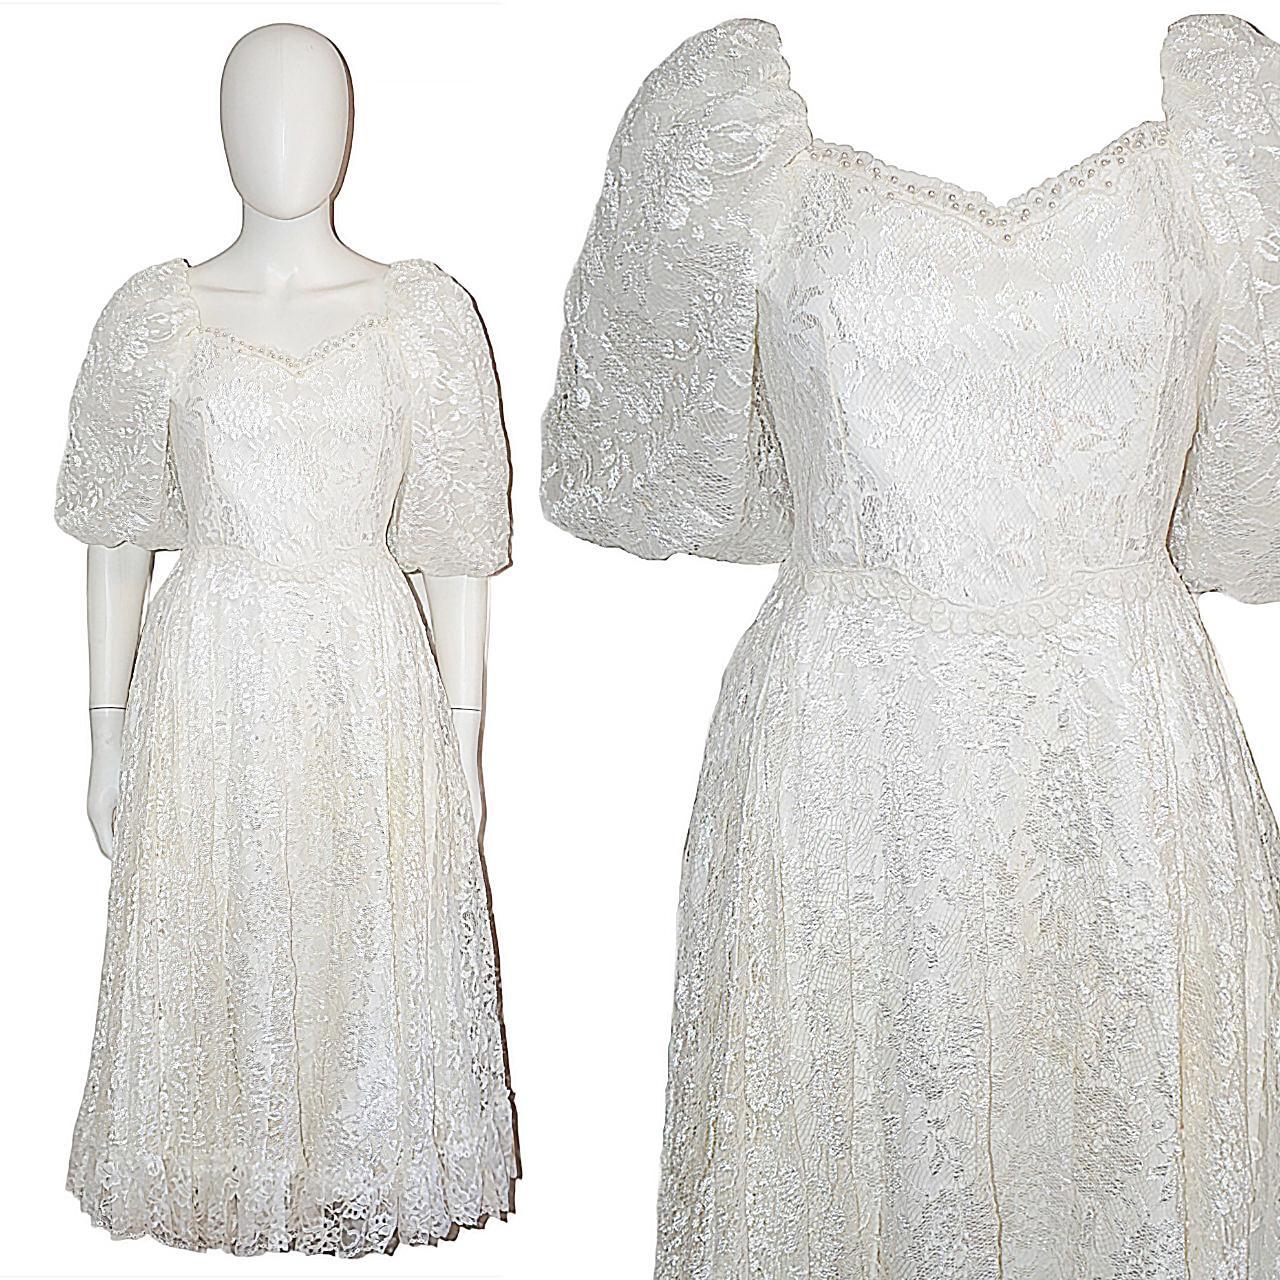 VINTAGE Victorian White Wedding Sheer Lace Puff... - Depop